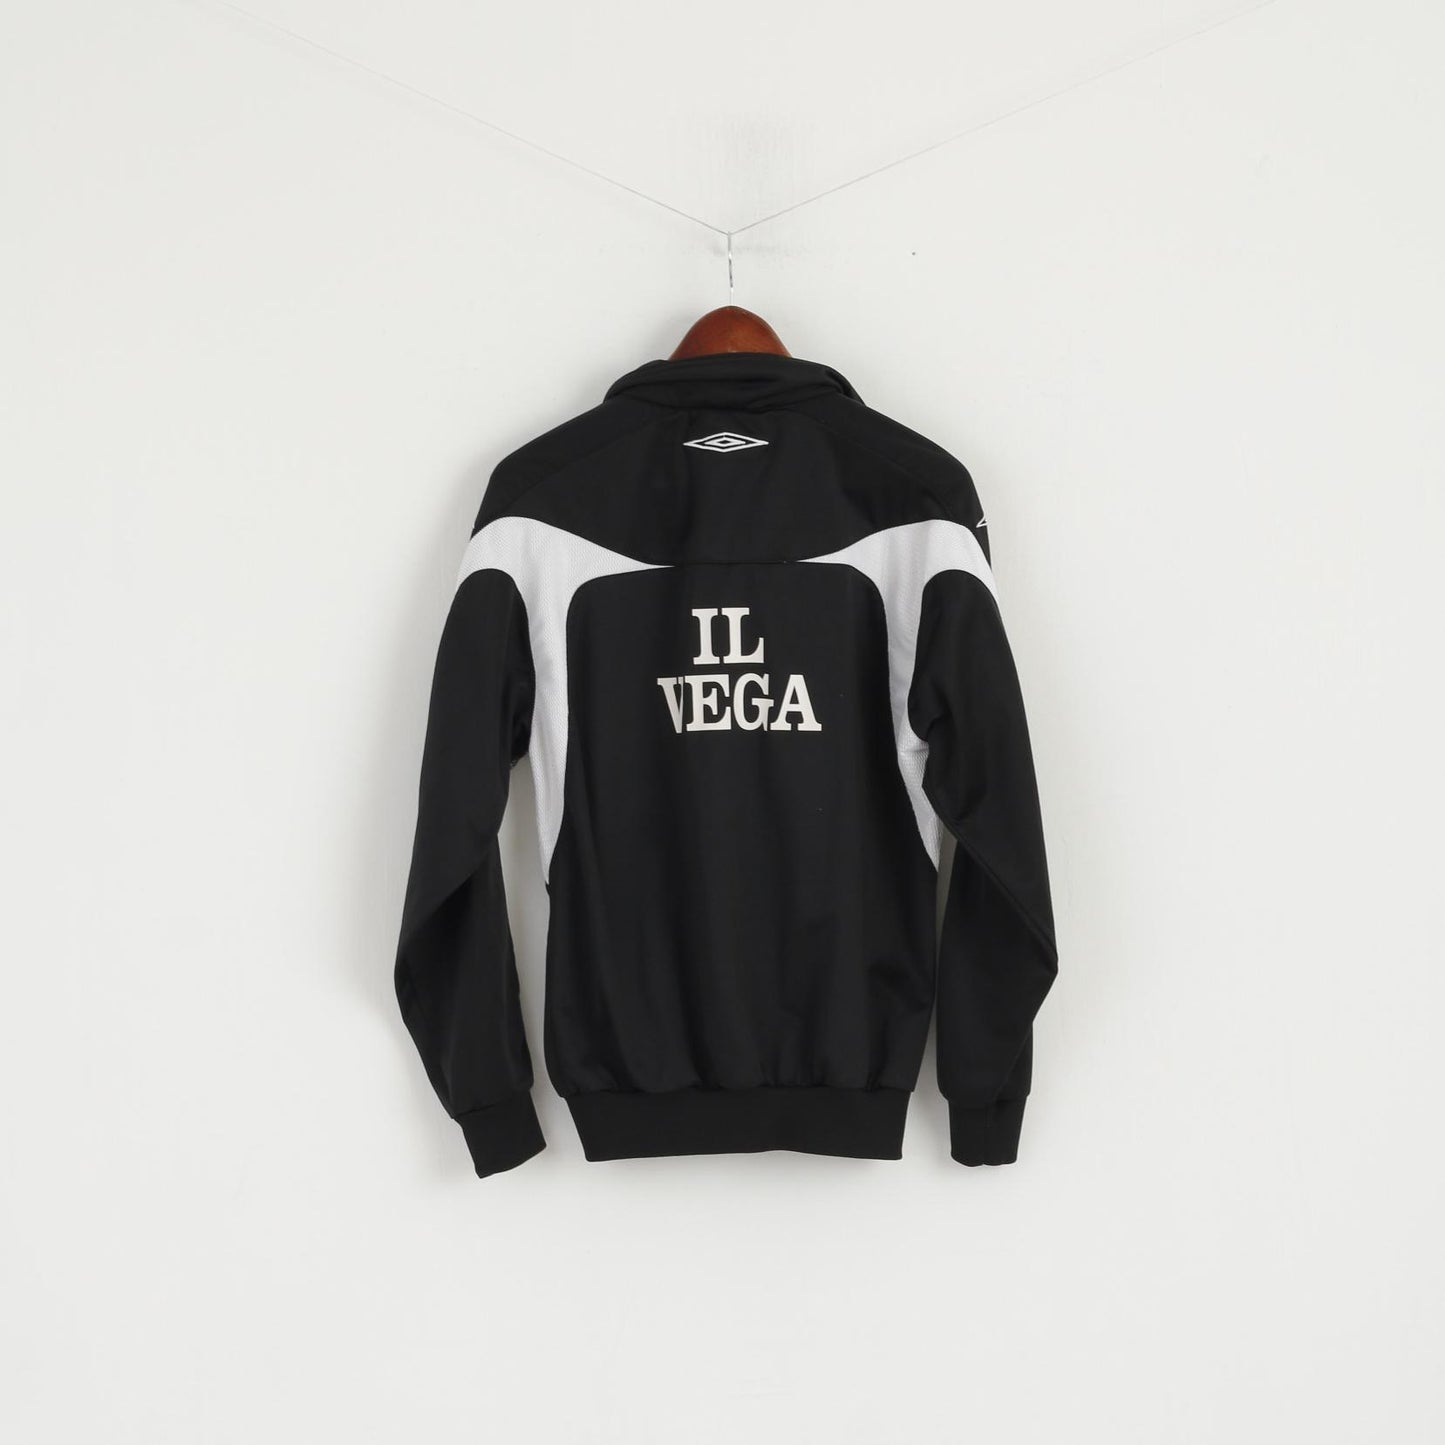 Umbro Mens S Sweatshirt Black IL Vega Football Full Zipper Sabina Track Top